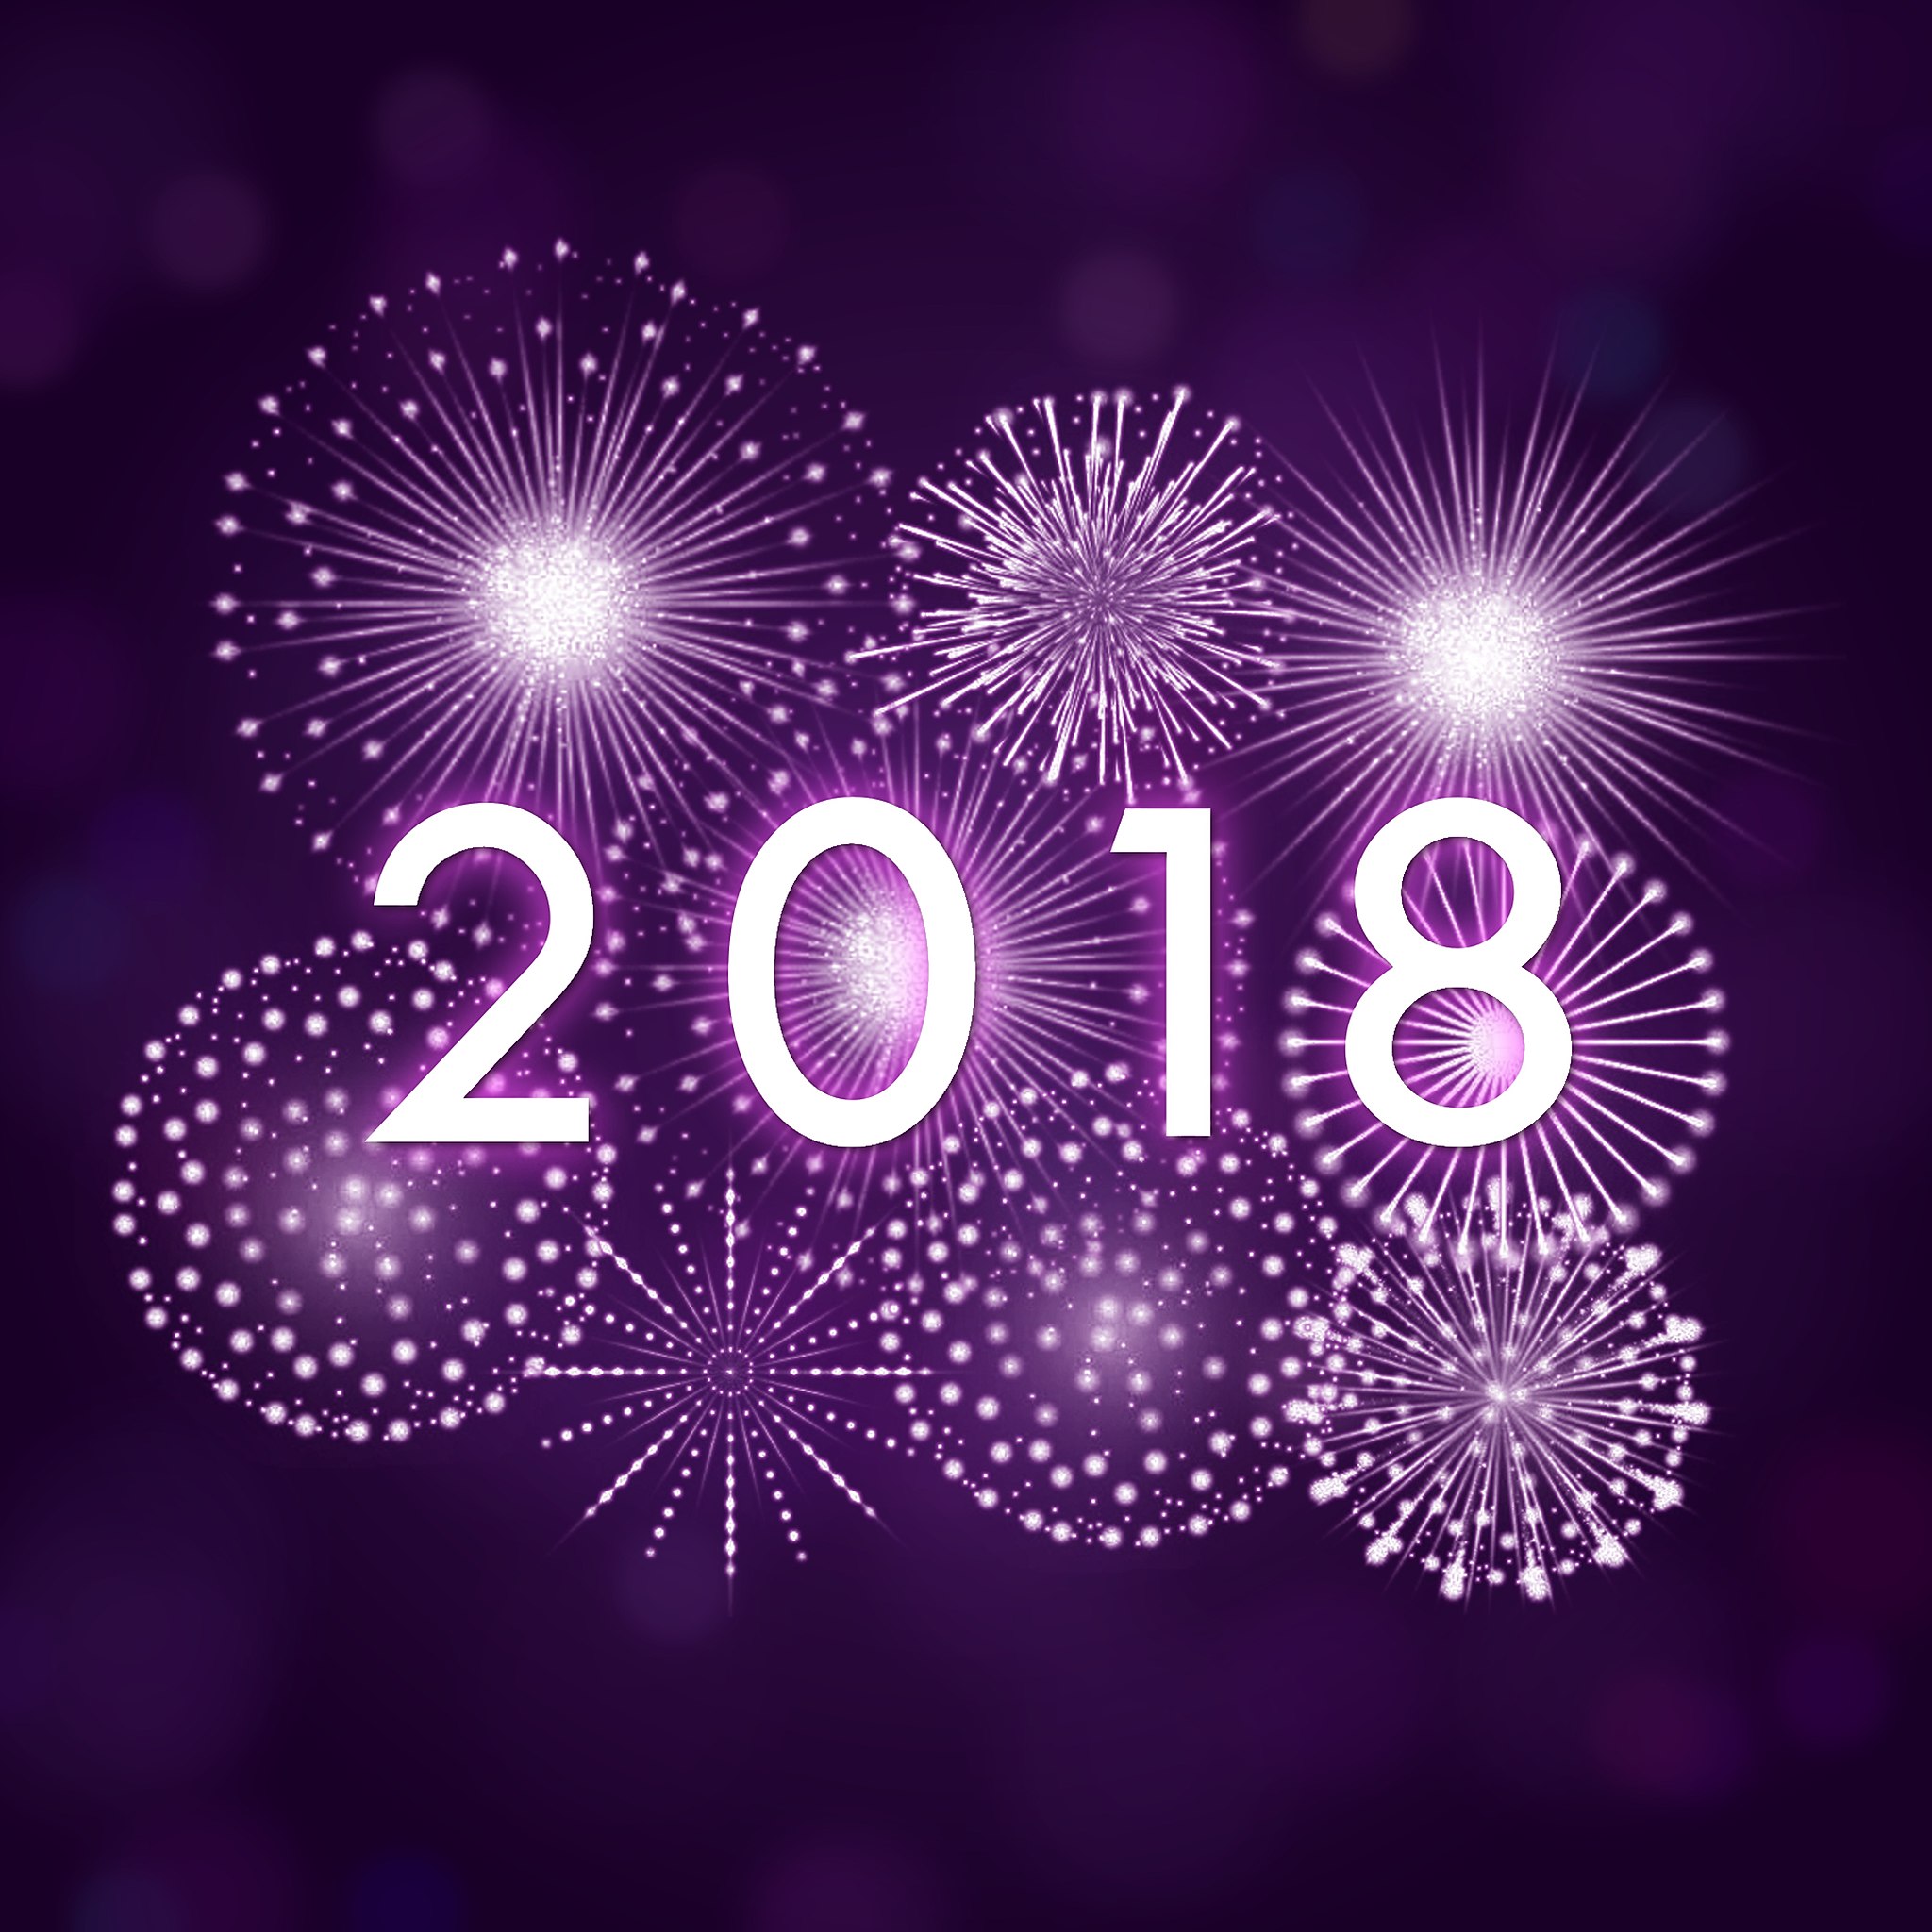 File:2018 fireworks purple.jpg - Wikimedia Commons